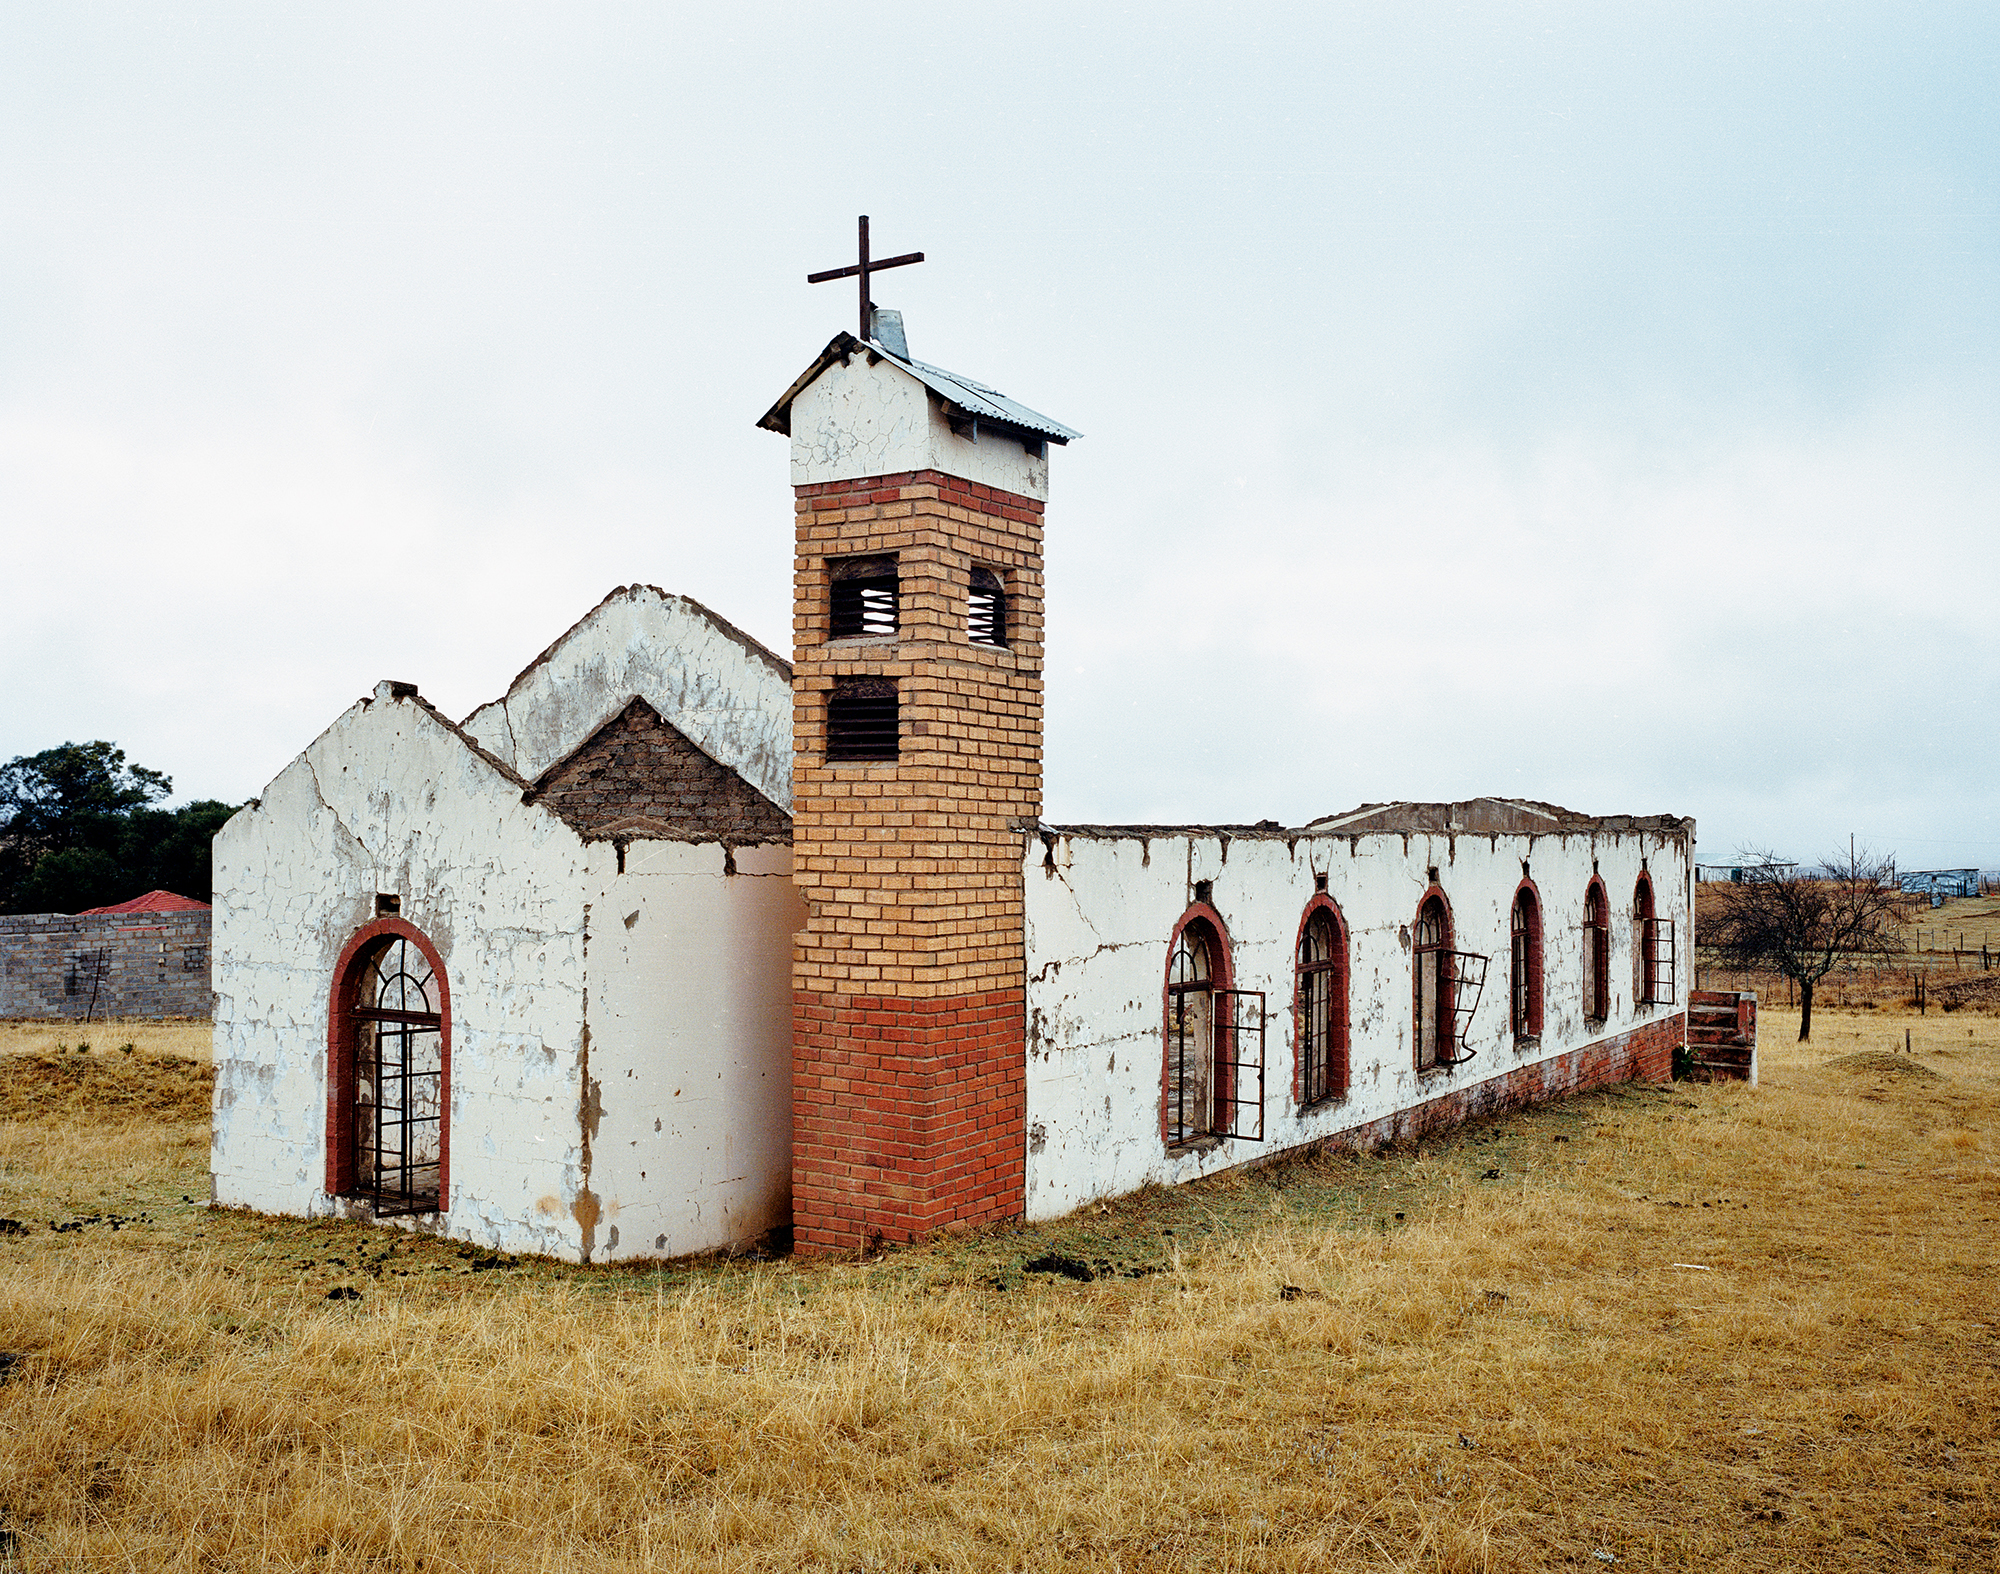 South Africa, Eastern Cape Qumbu, Donkey Church, 2020.